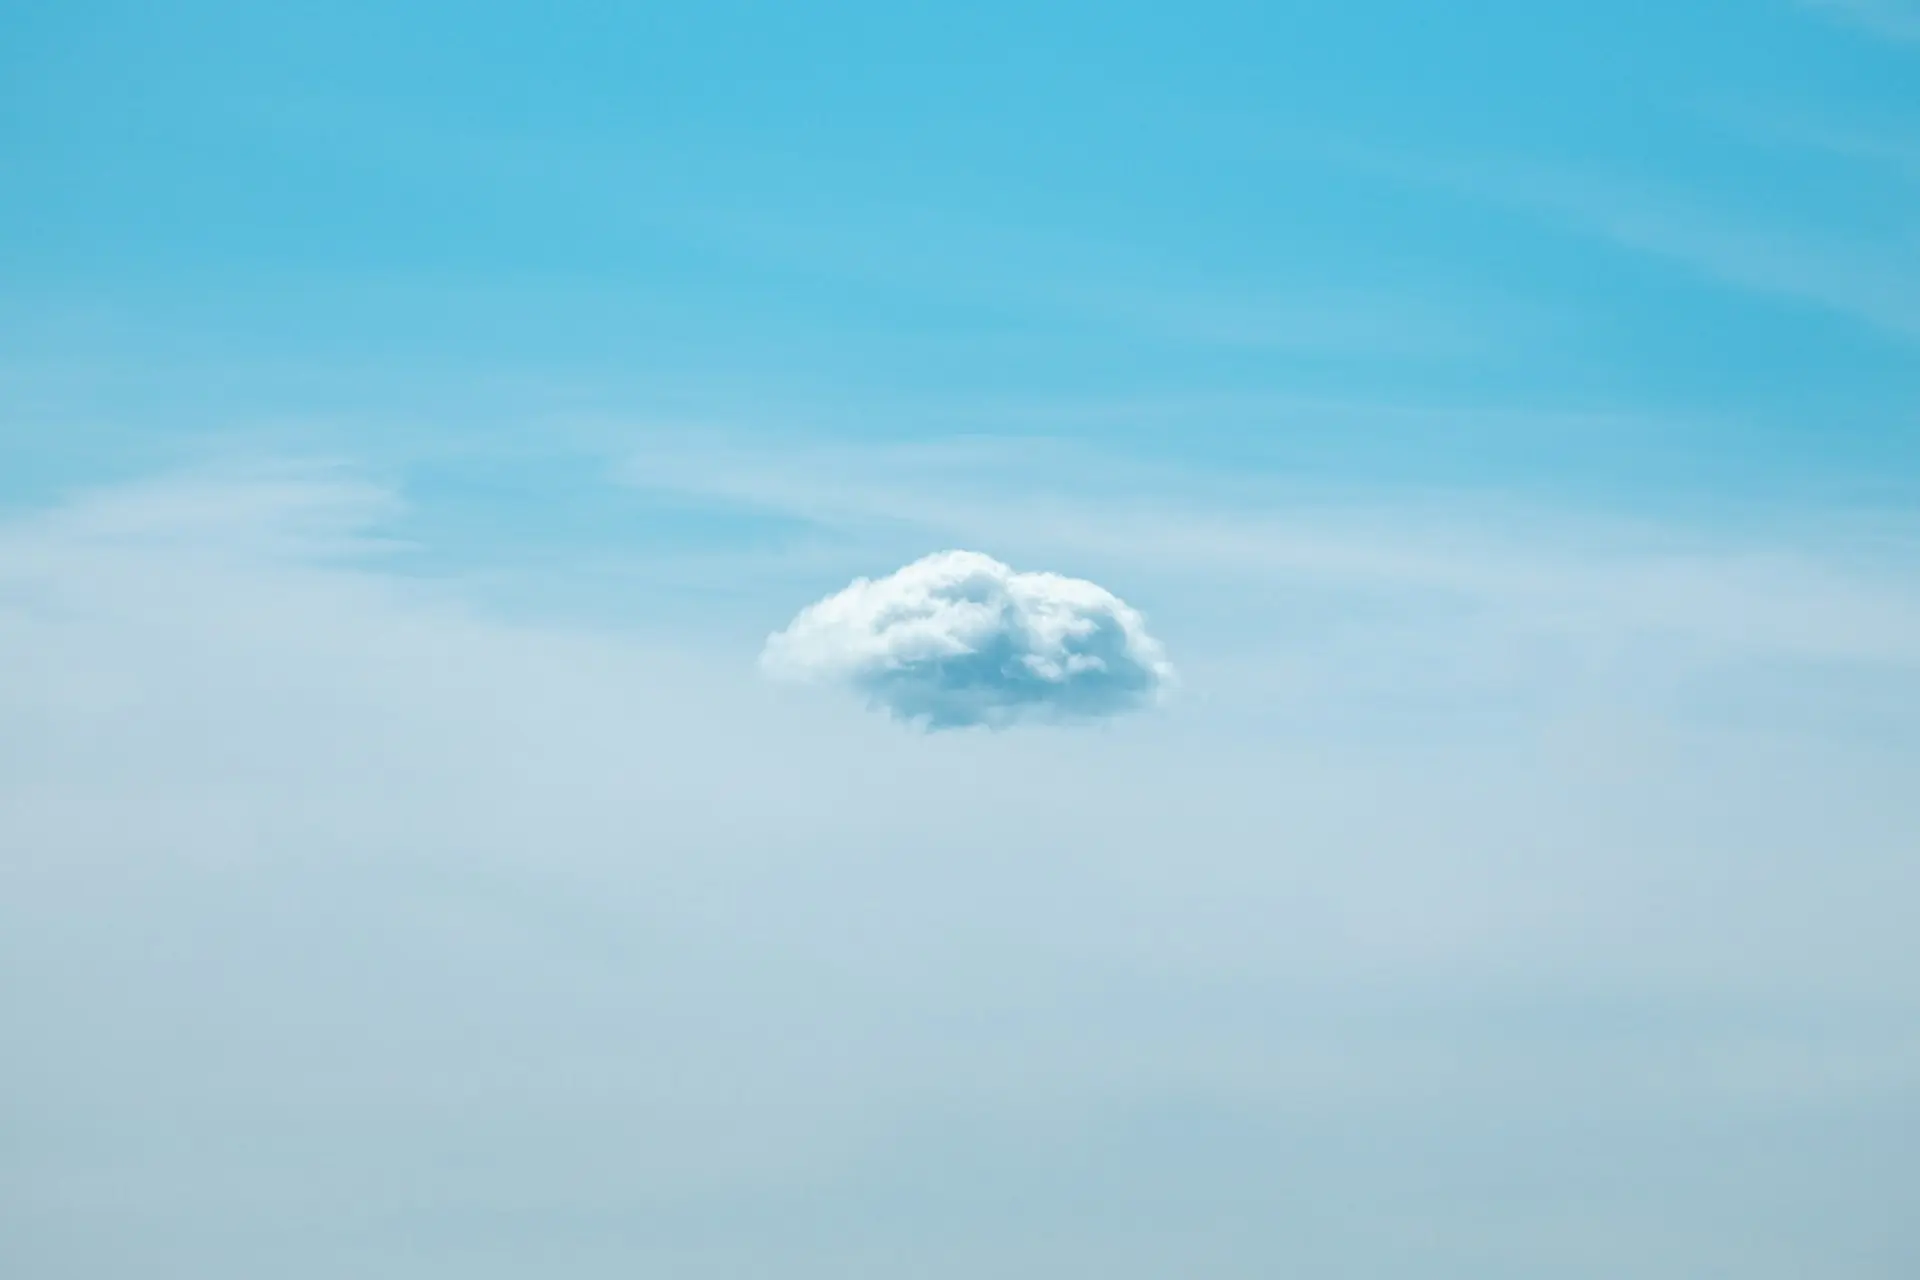 A single cloud by Parrish Freeman on Unsplash